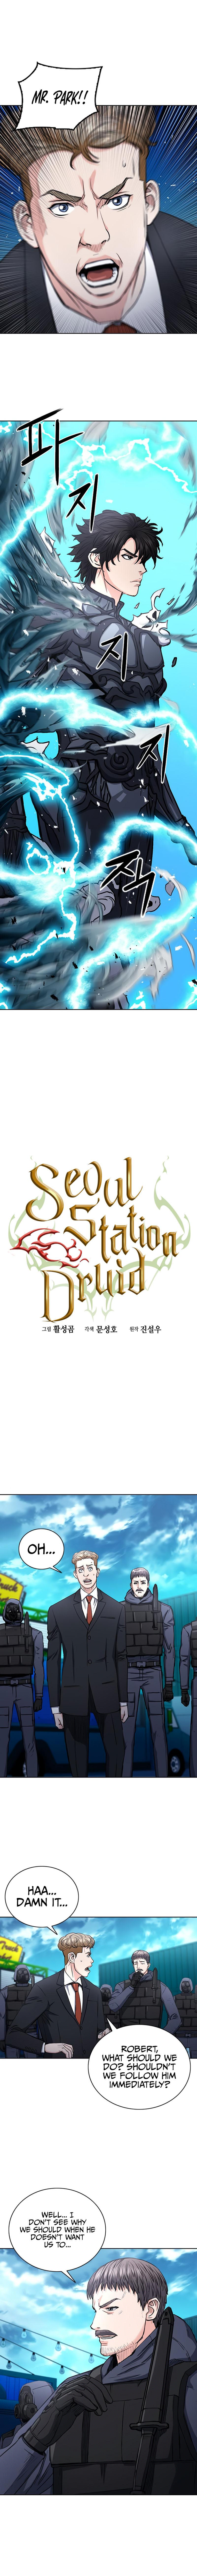 seoul_station_druid_65_1